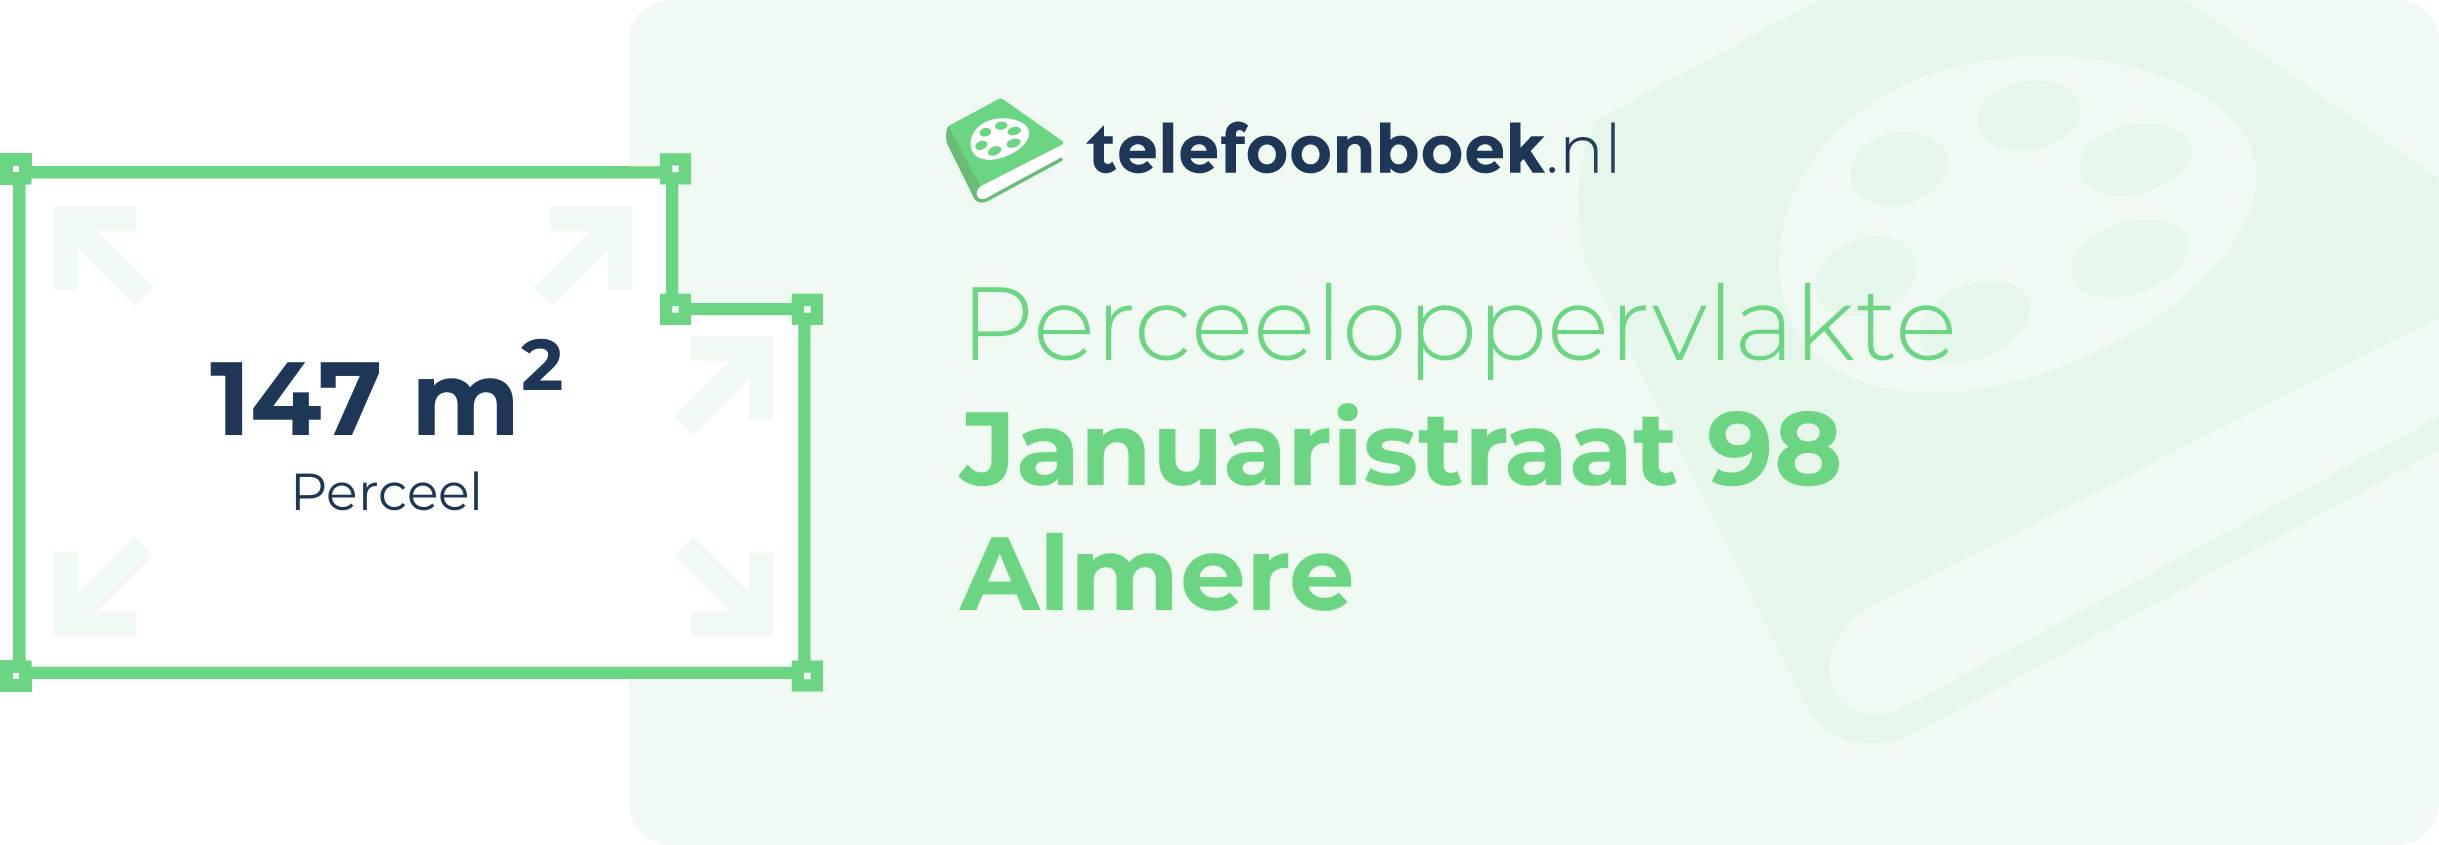 Perceeloppervlakte Januaristraat 98 Almere